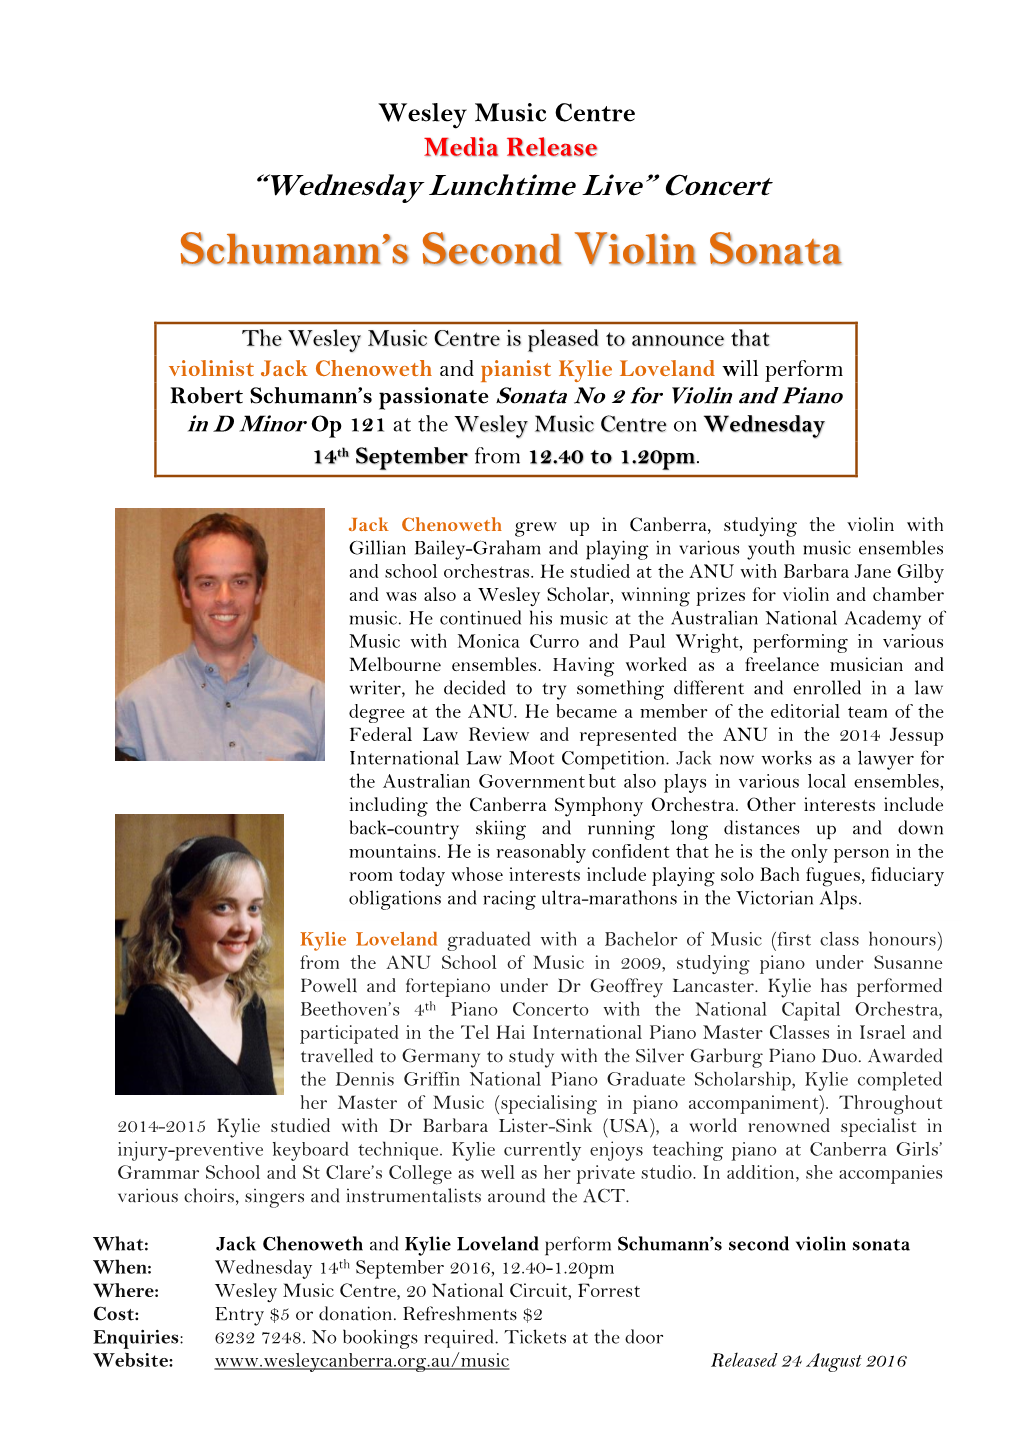 Schumann's Second Violin Sonata